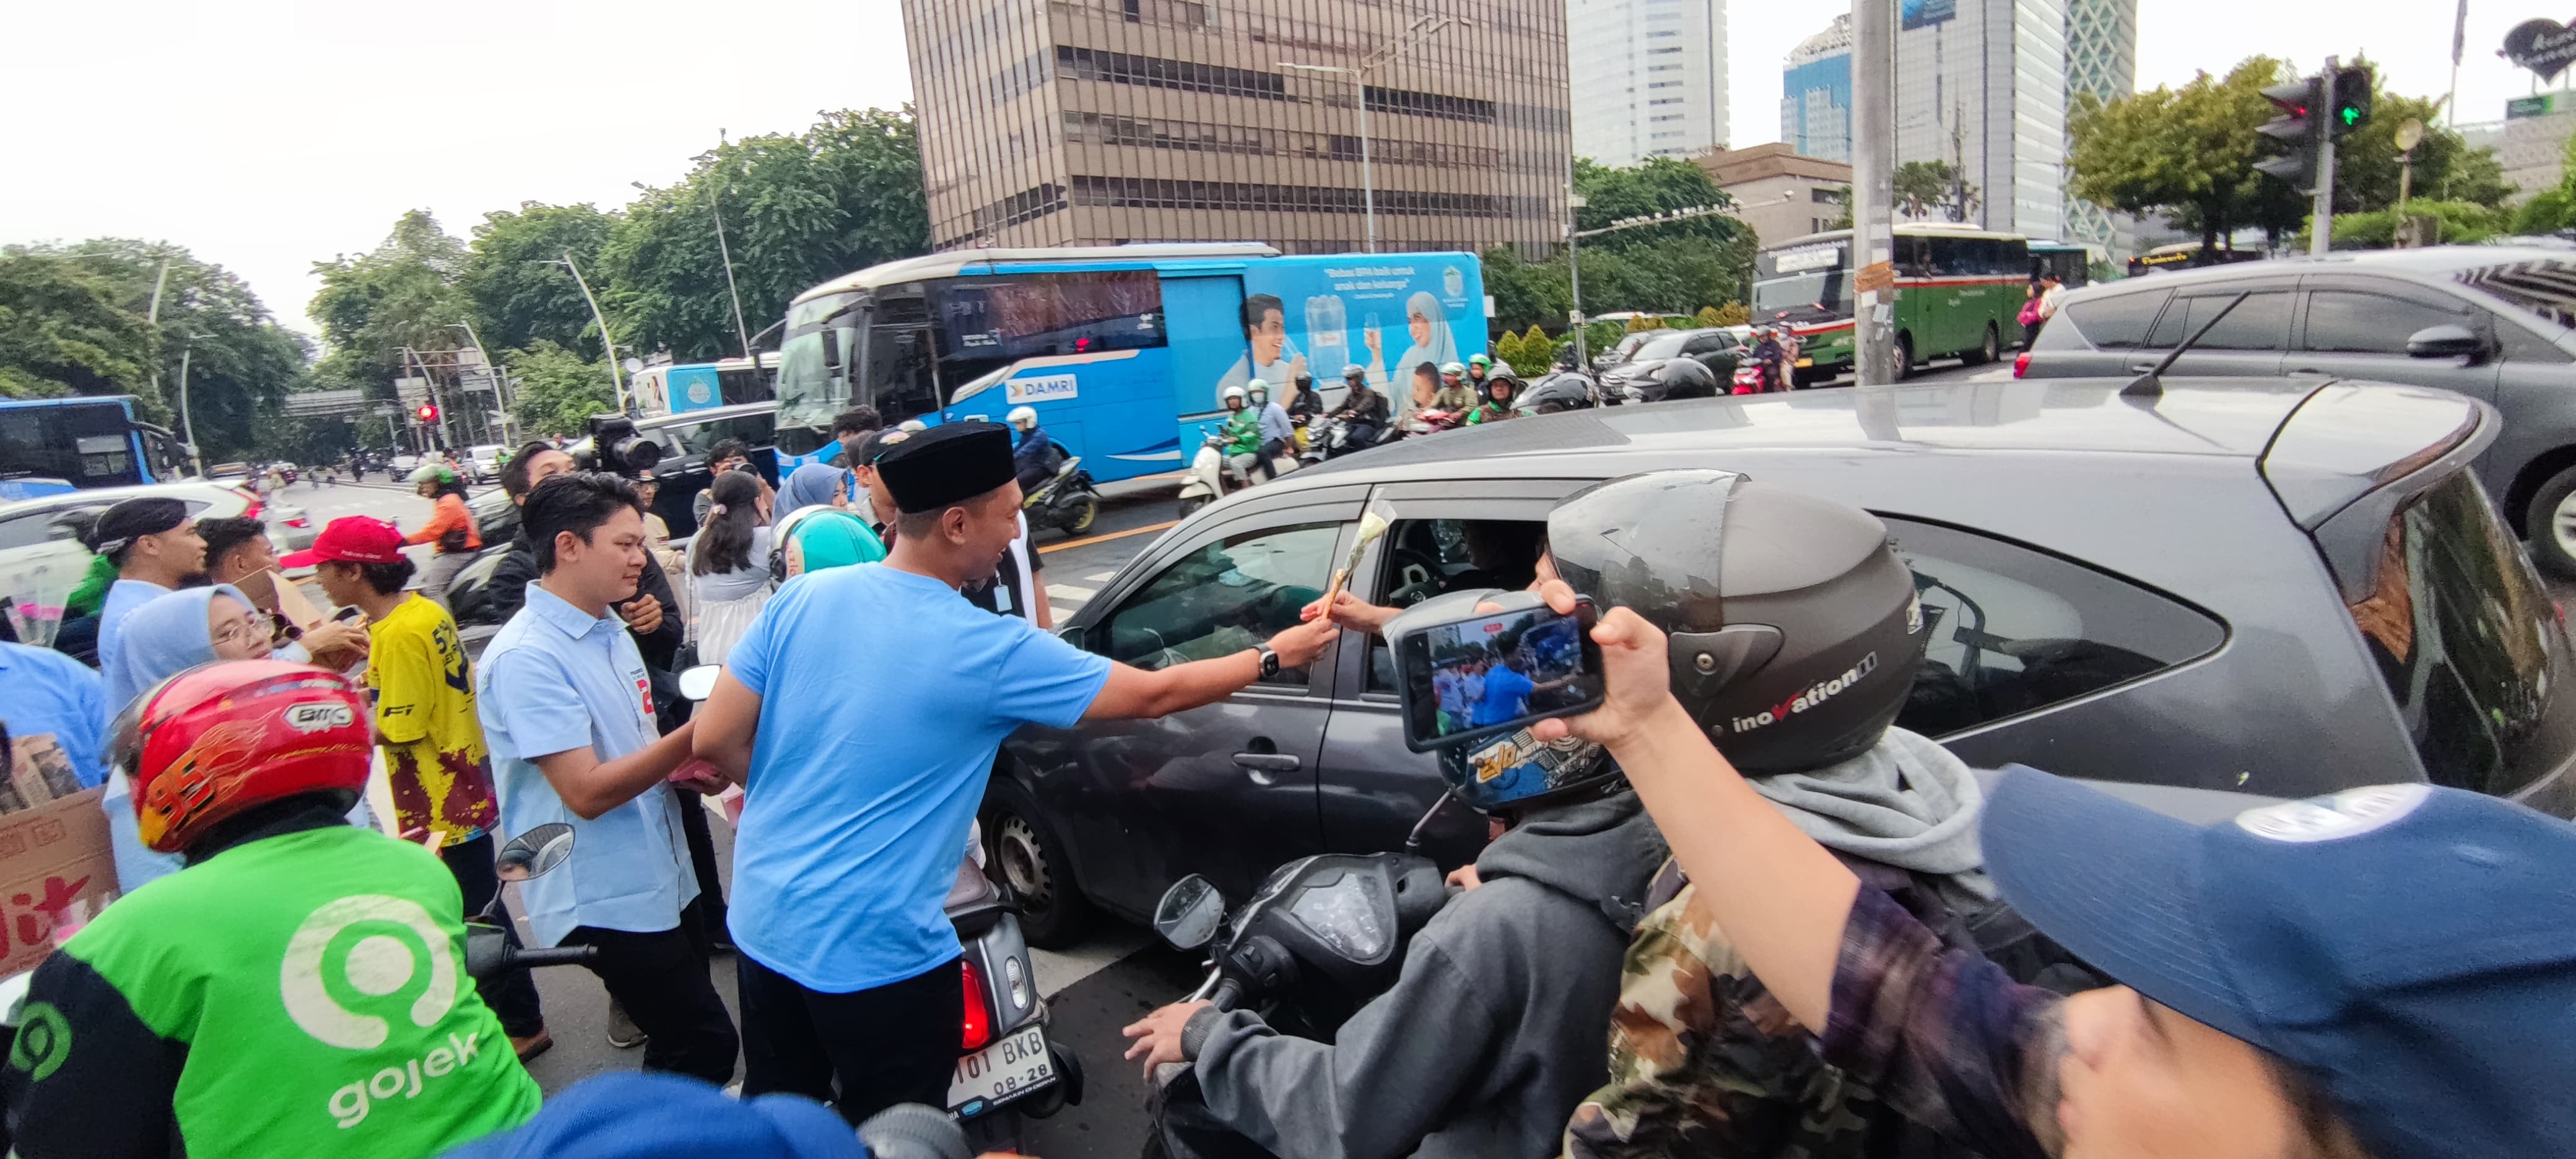 Komandan TKN Fanta, Arief Rosyid bagikan bunga dan cokelat ke masyarakat (Sinpo.id/Tim Media)